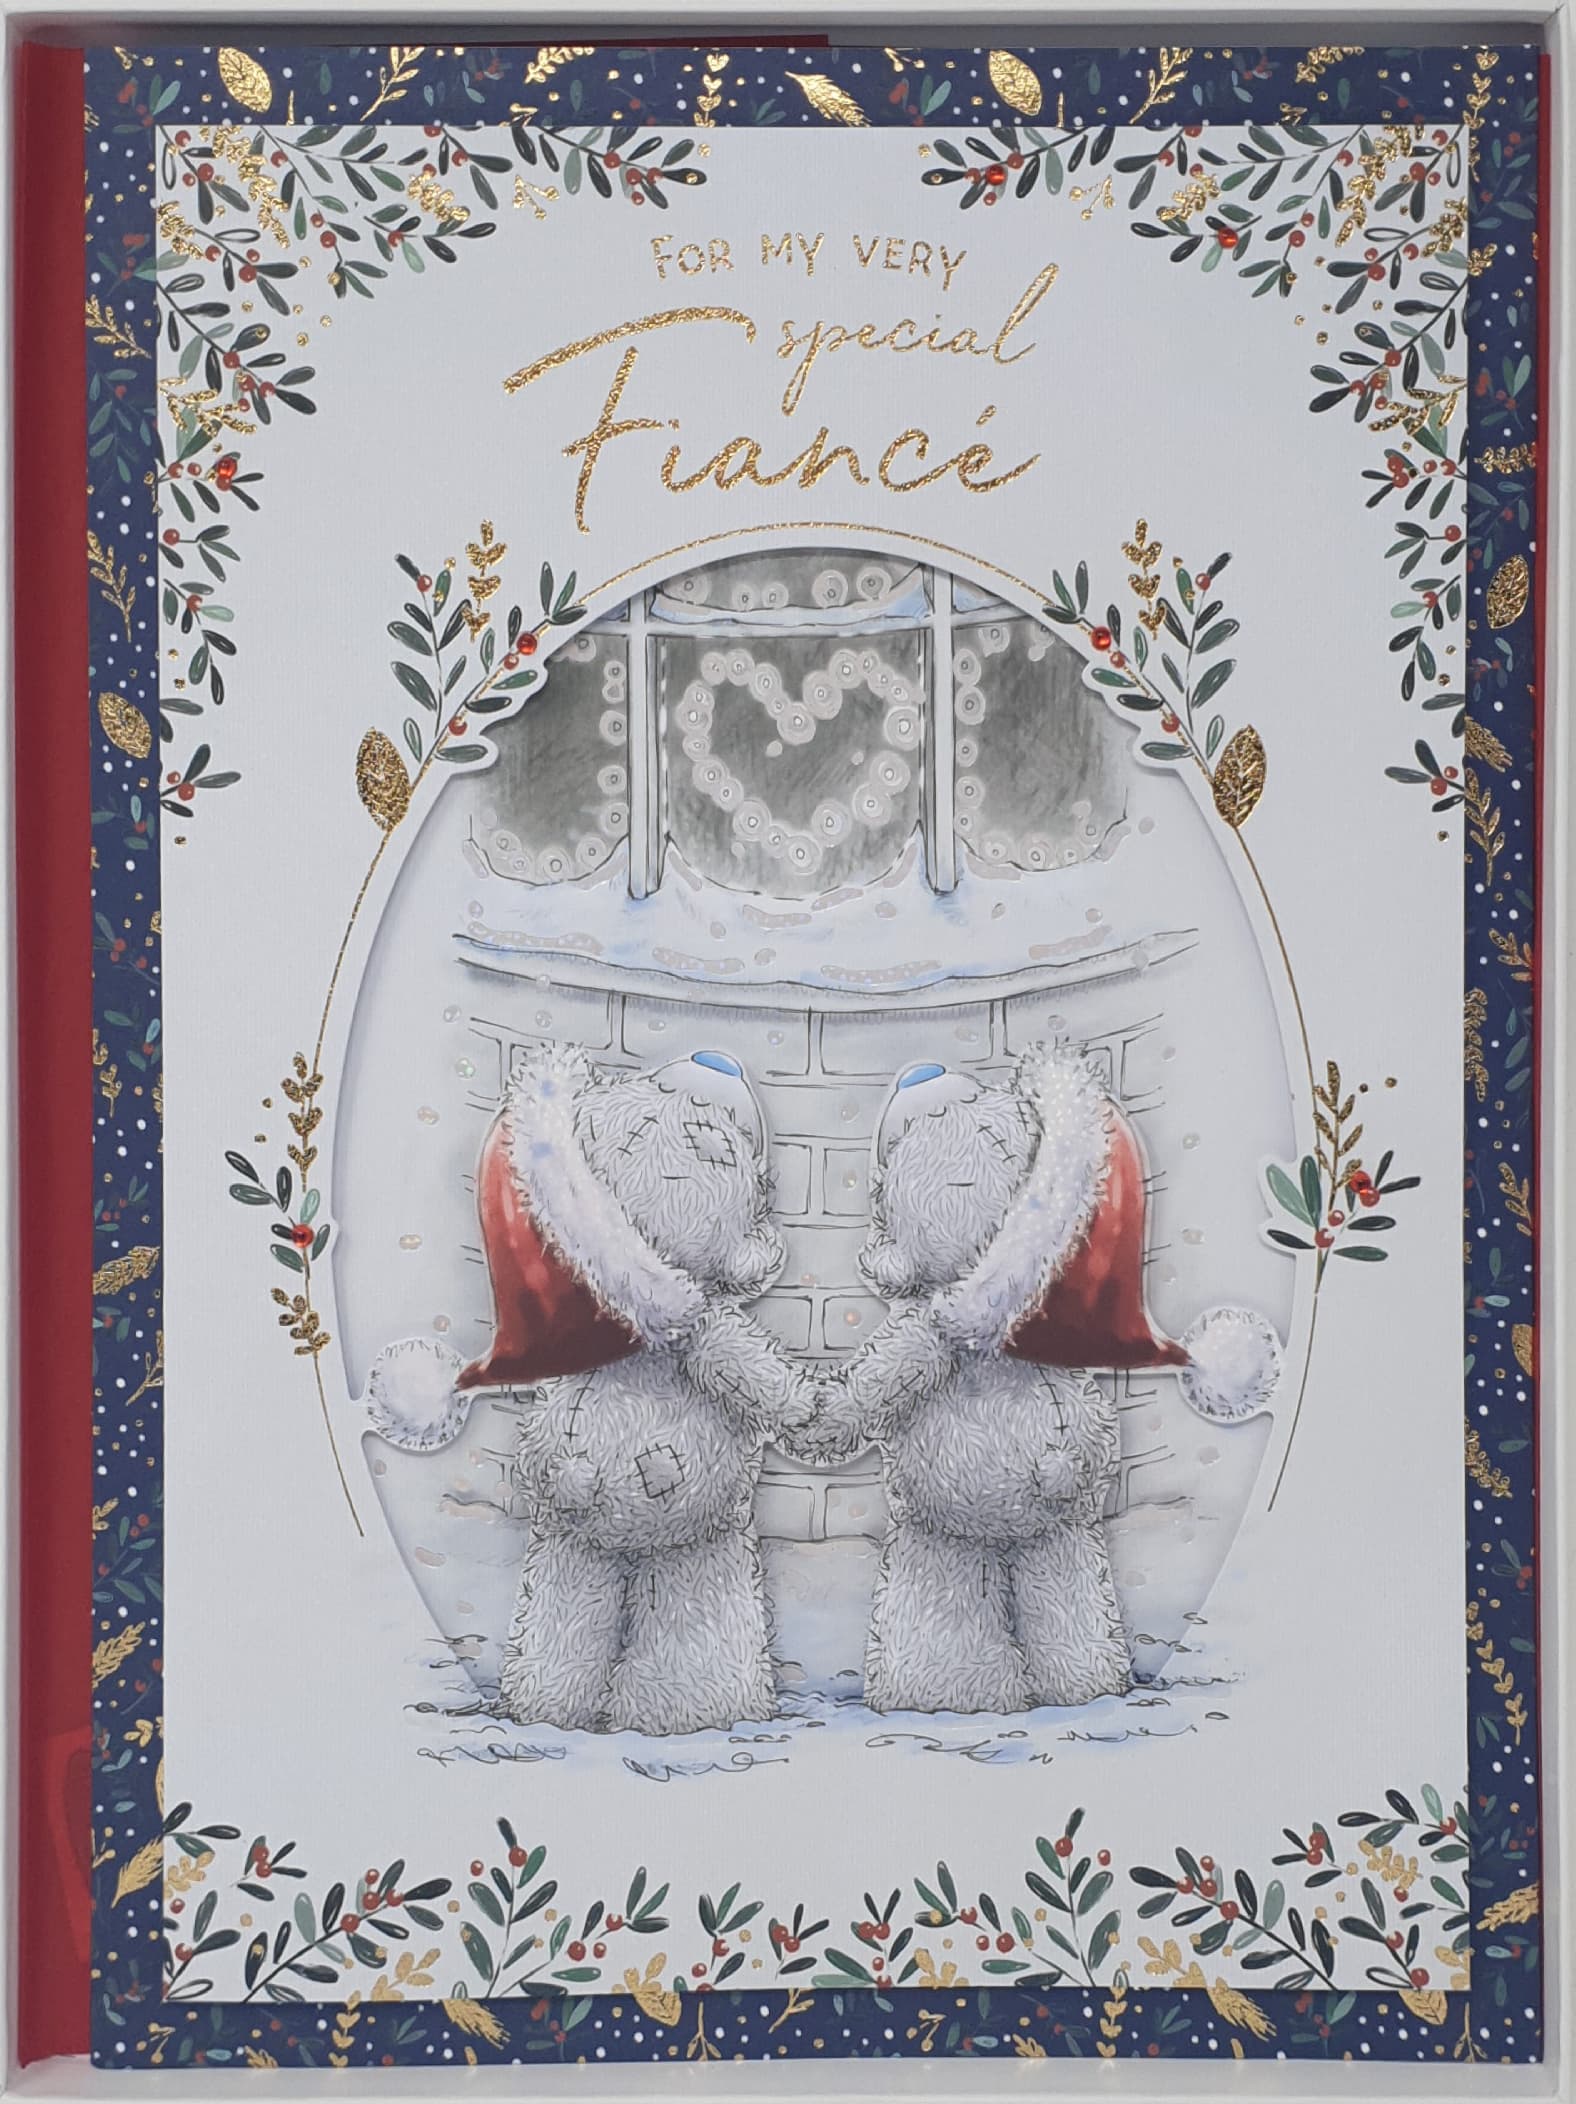 Fiancé Christmas Card / Teddy Bears Holding Hands Looking Through Window (Card In A Presentation Box)